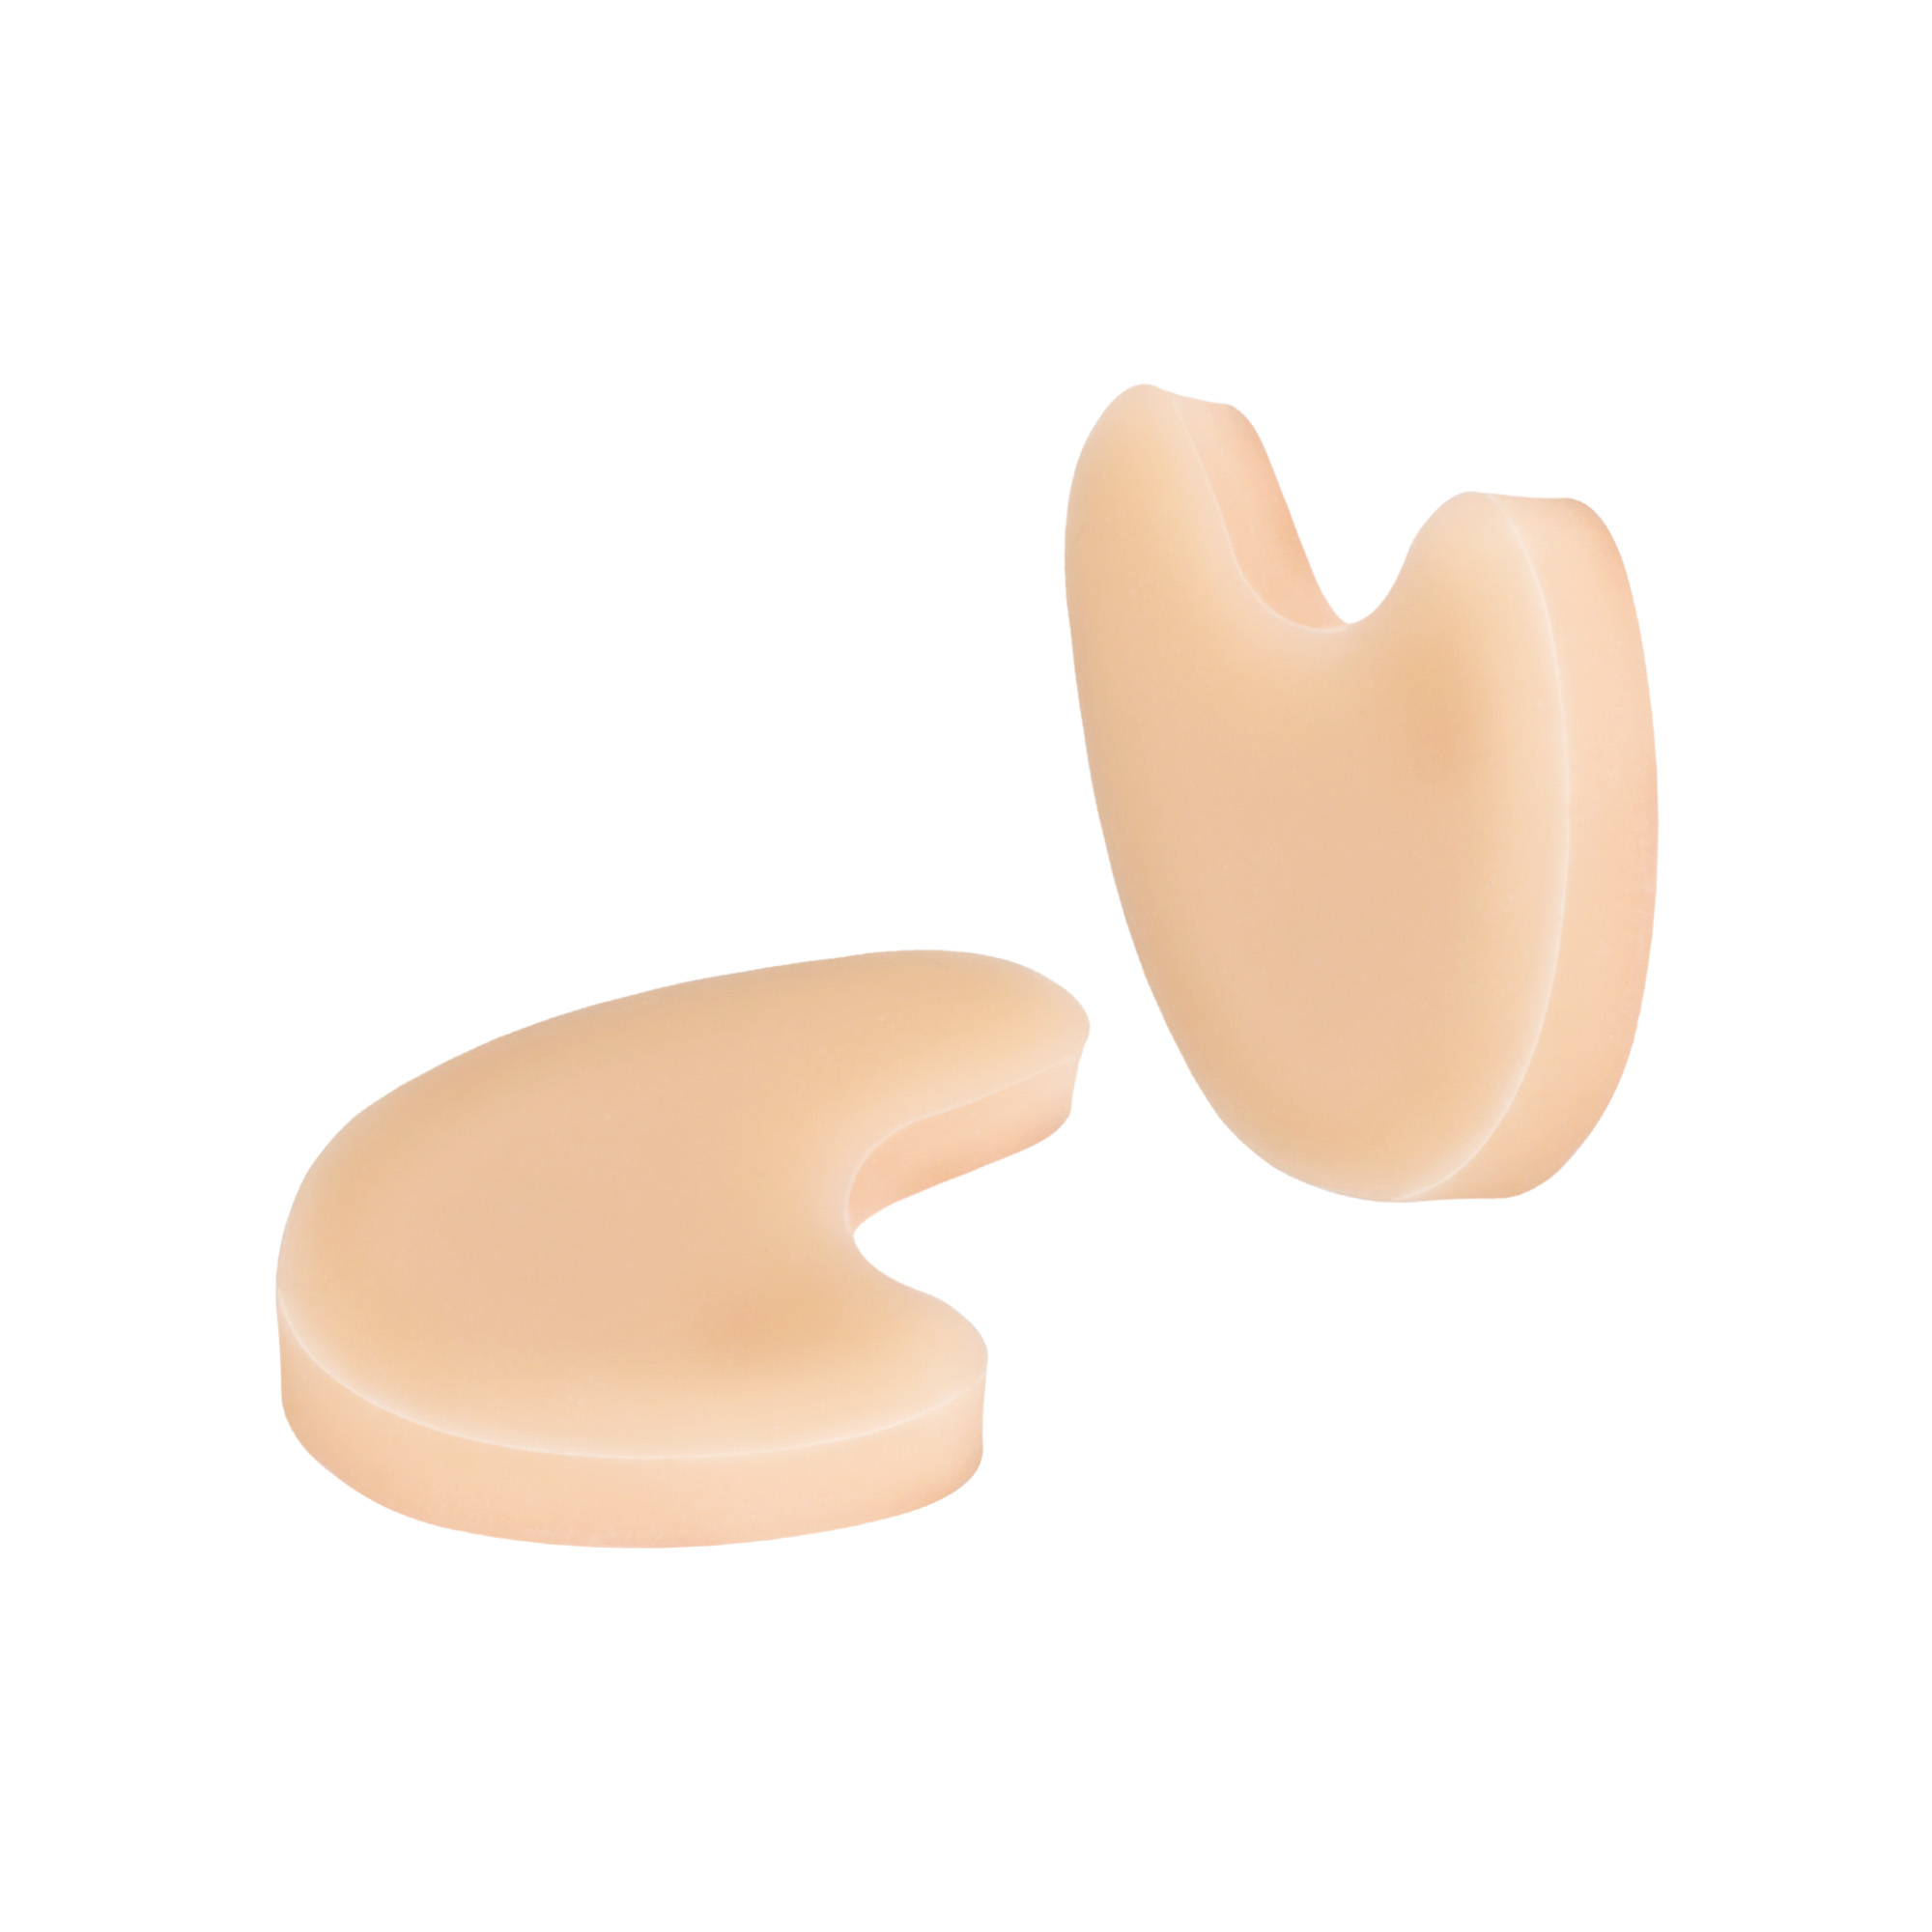 Tecniwork Polymer Gel flesh-coloured toe separator size Medium /Large 1 pc